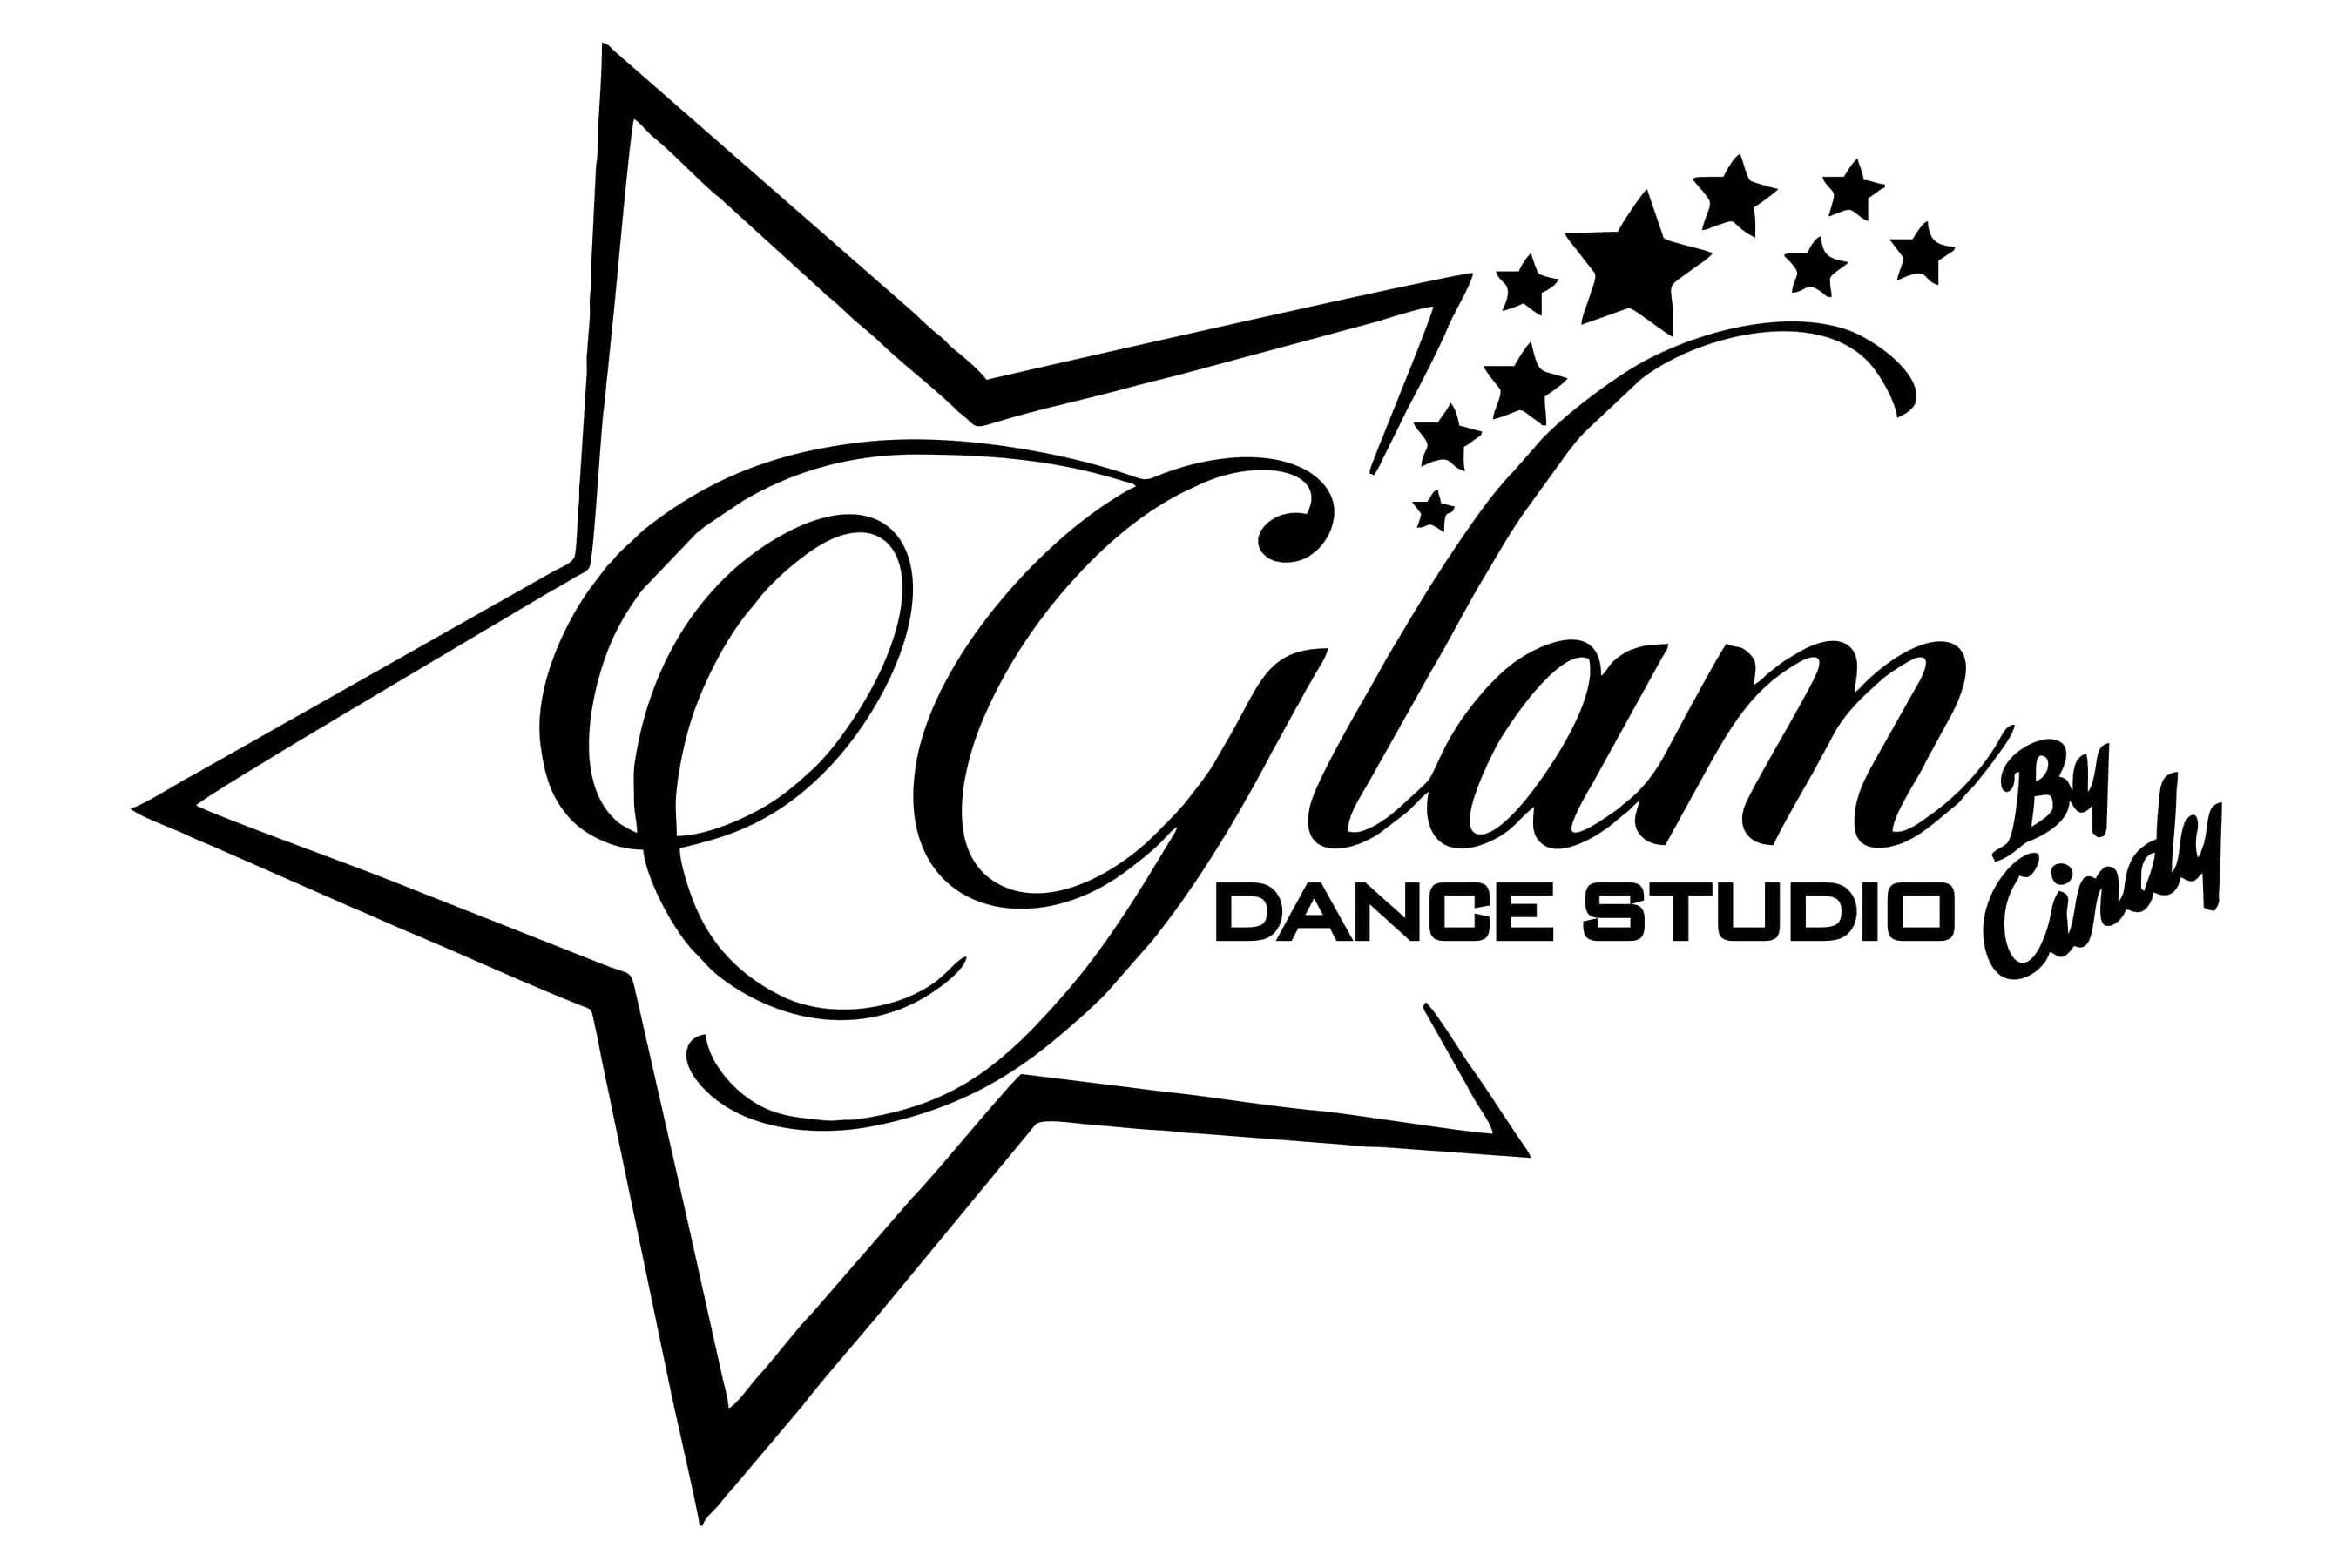  GLAM DANCE STUDIO BY CINDY